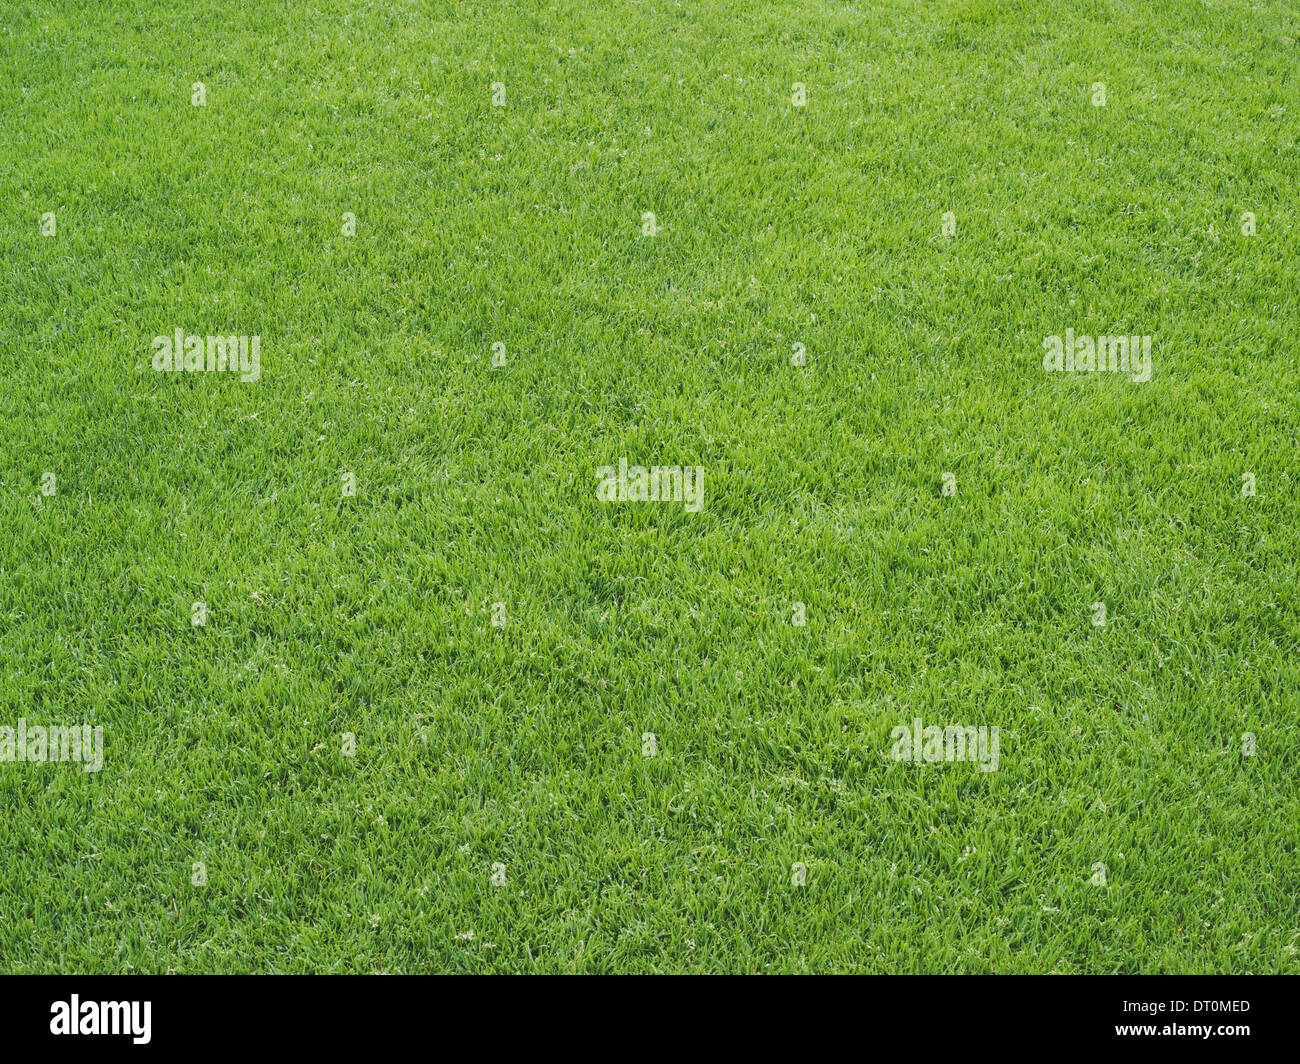 Washington USA Green grass surface sur un terrain de sport athlétisme Banque D'Images